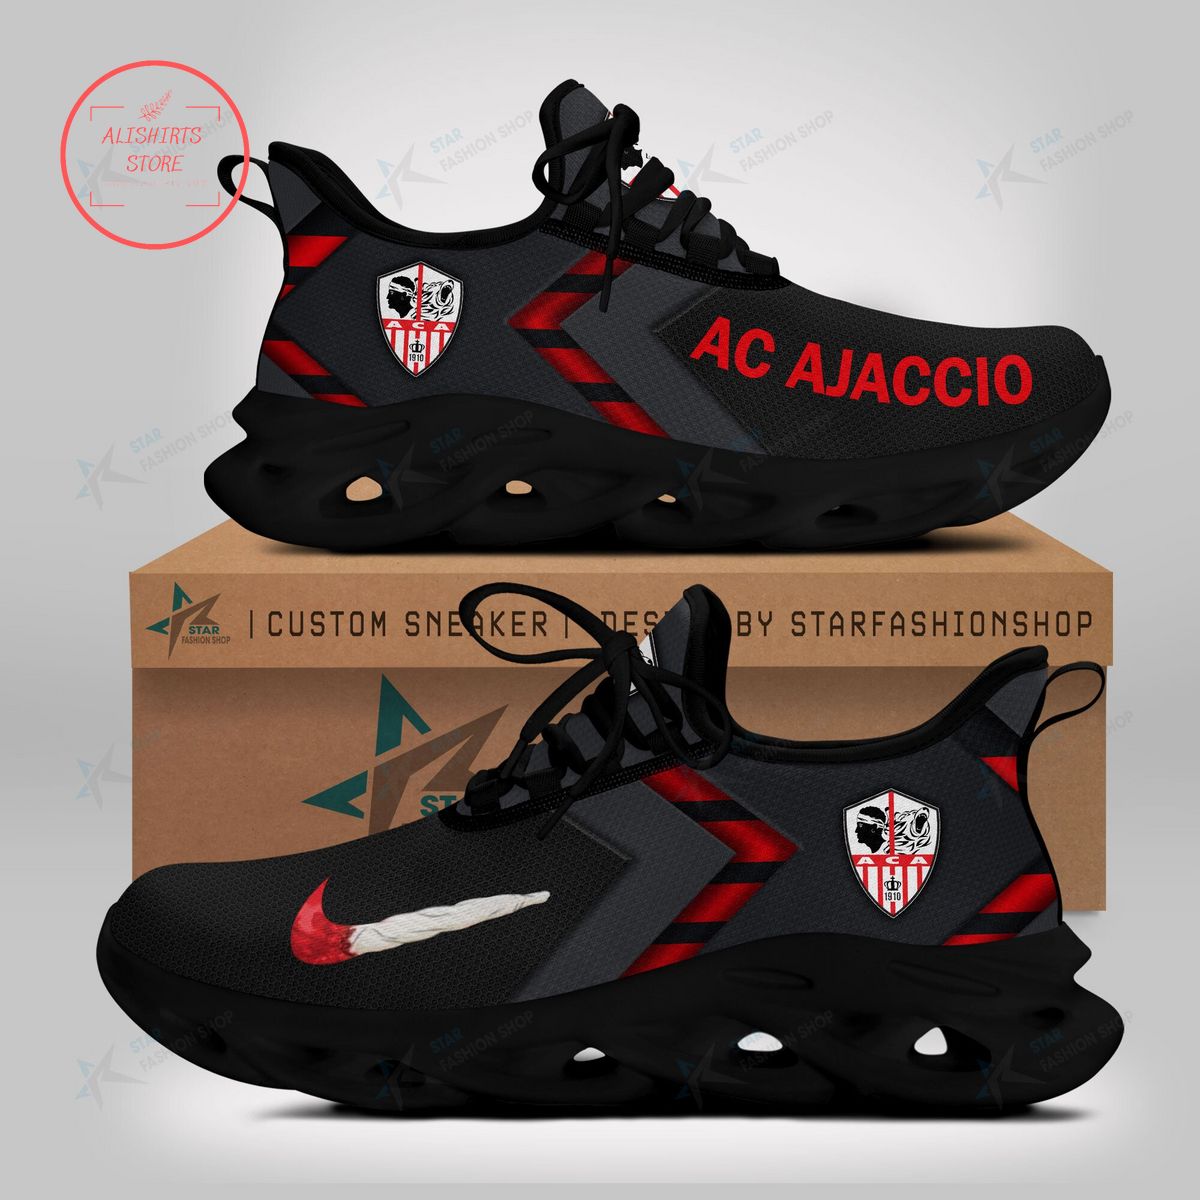 AC Ajaccio Max Soul Sneaker Shoes